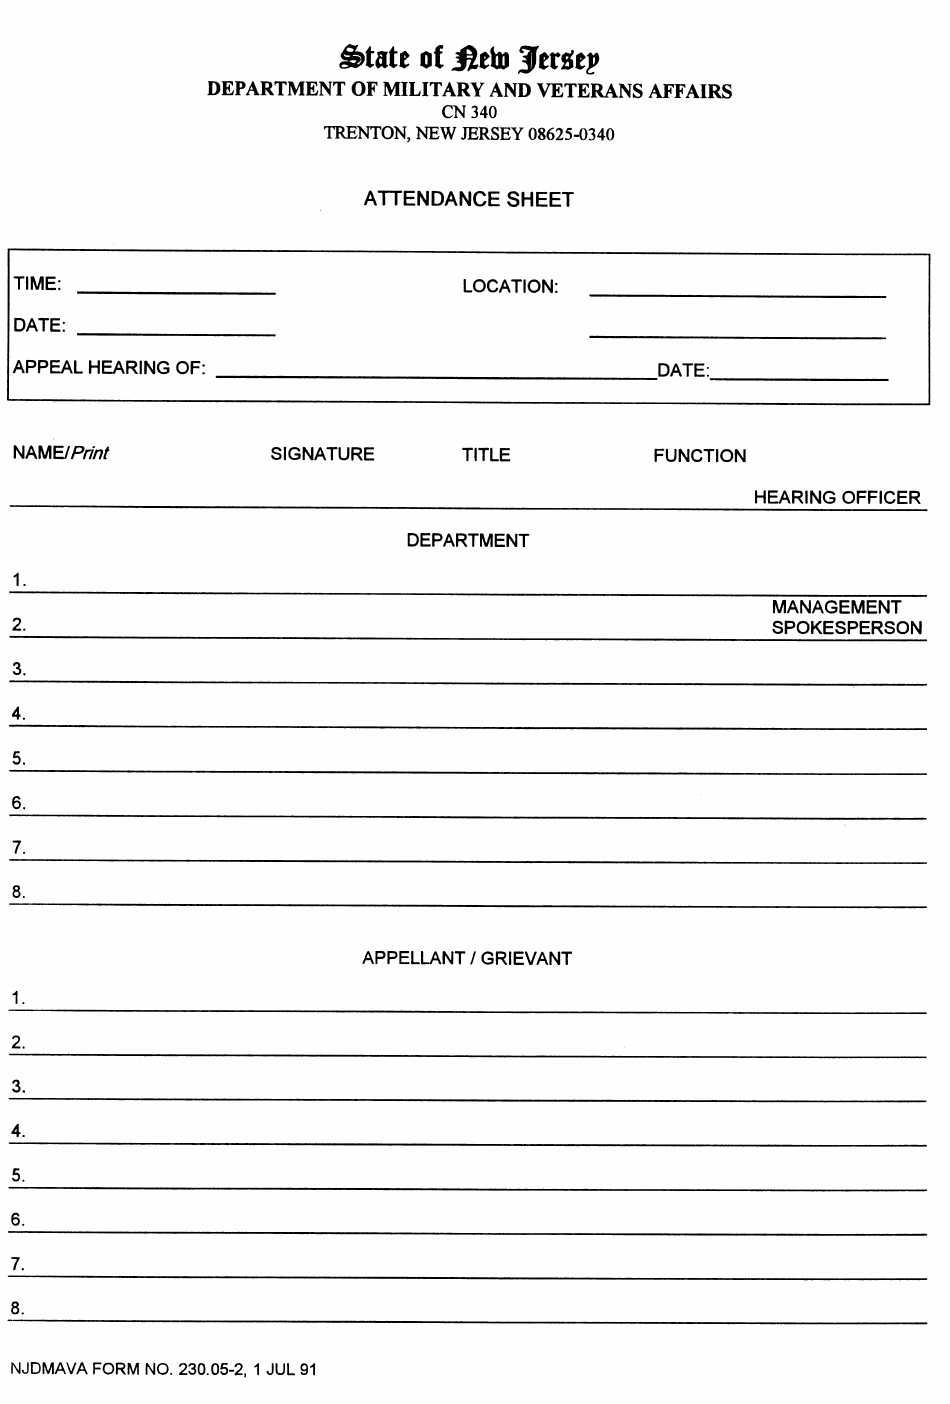 NJDMAVA Form 230.05-2 Attendance Sheet - New Jersey, Page 1